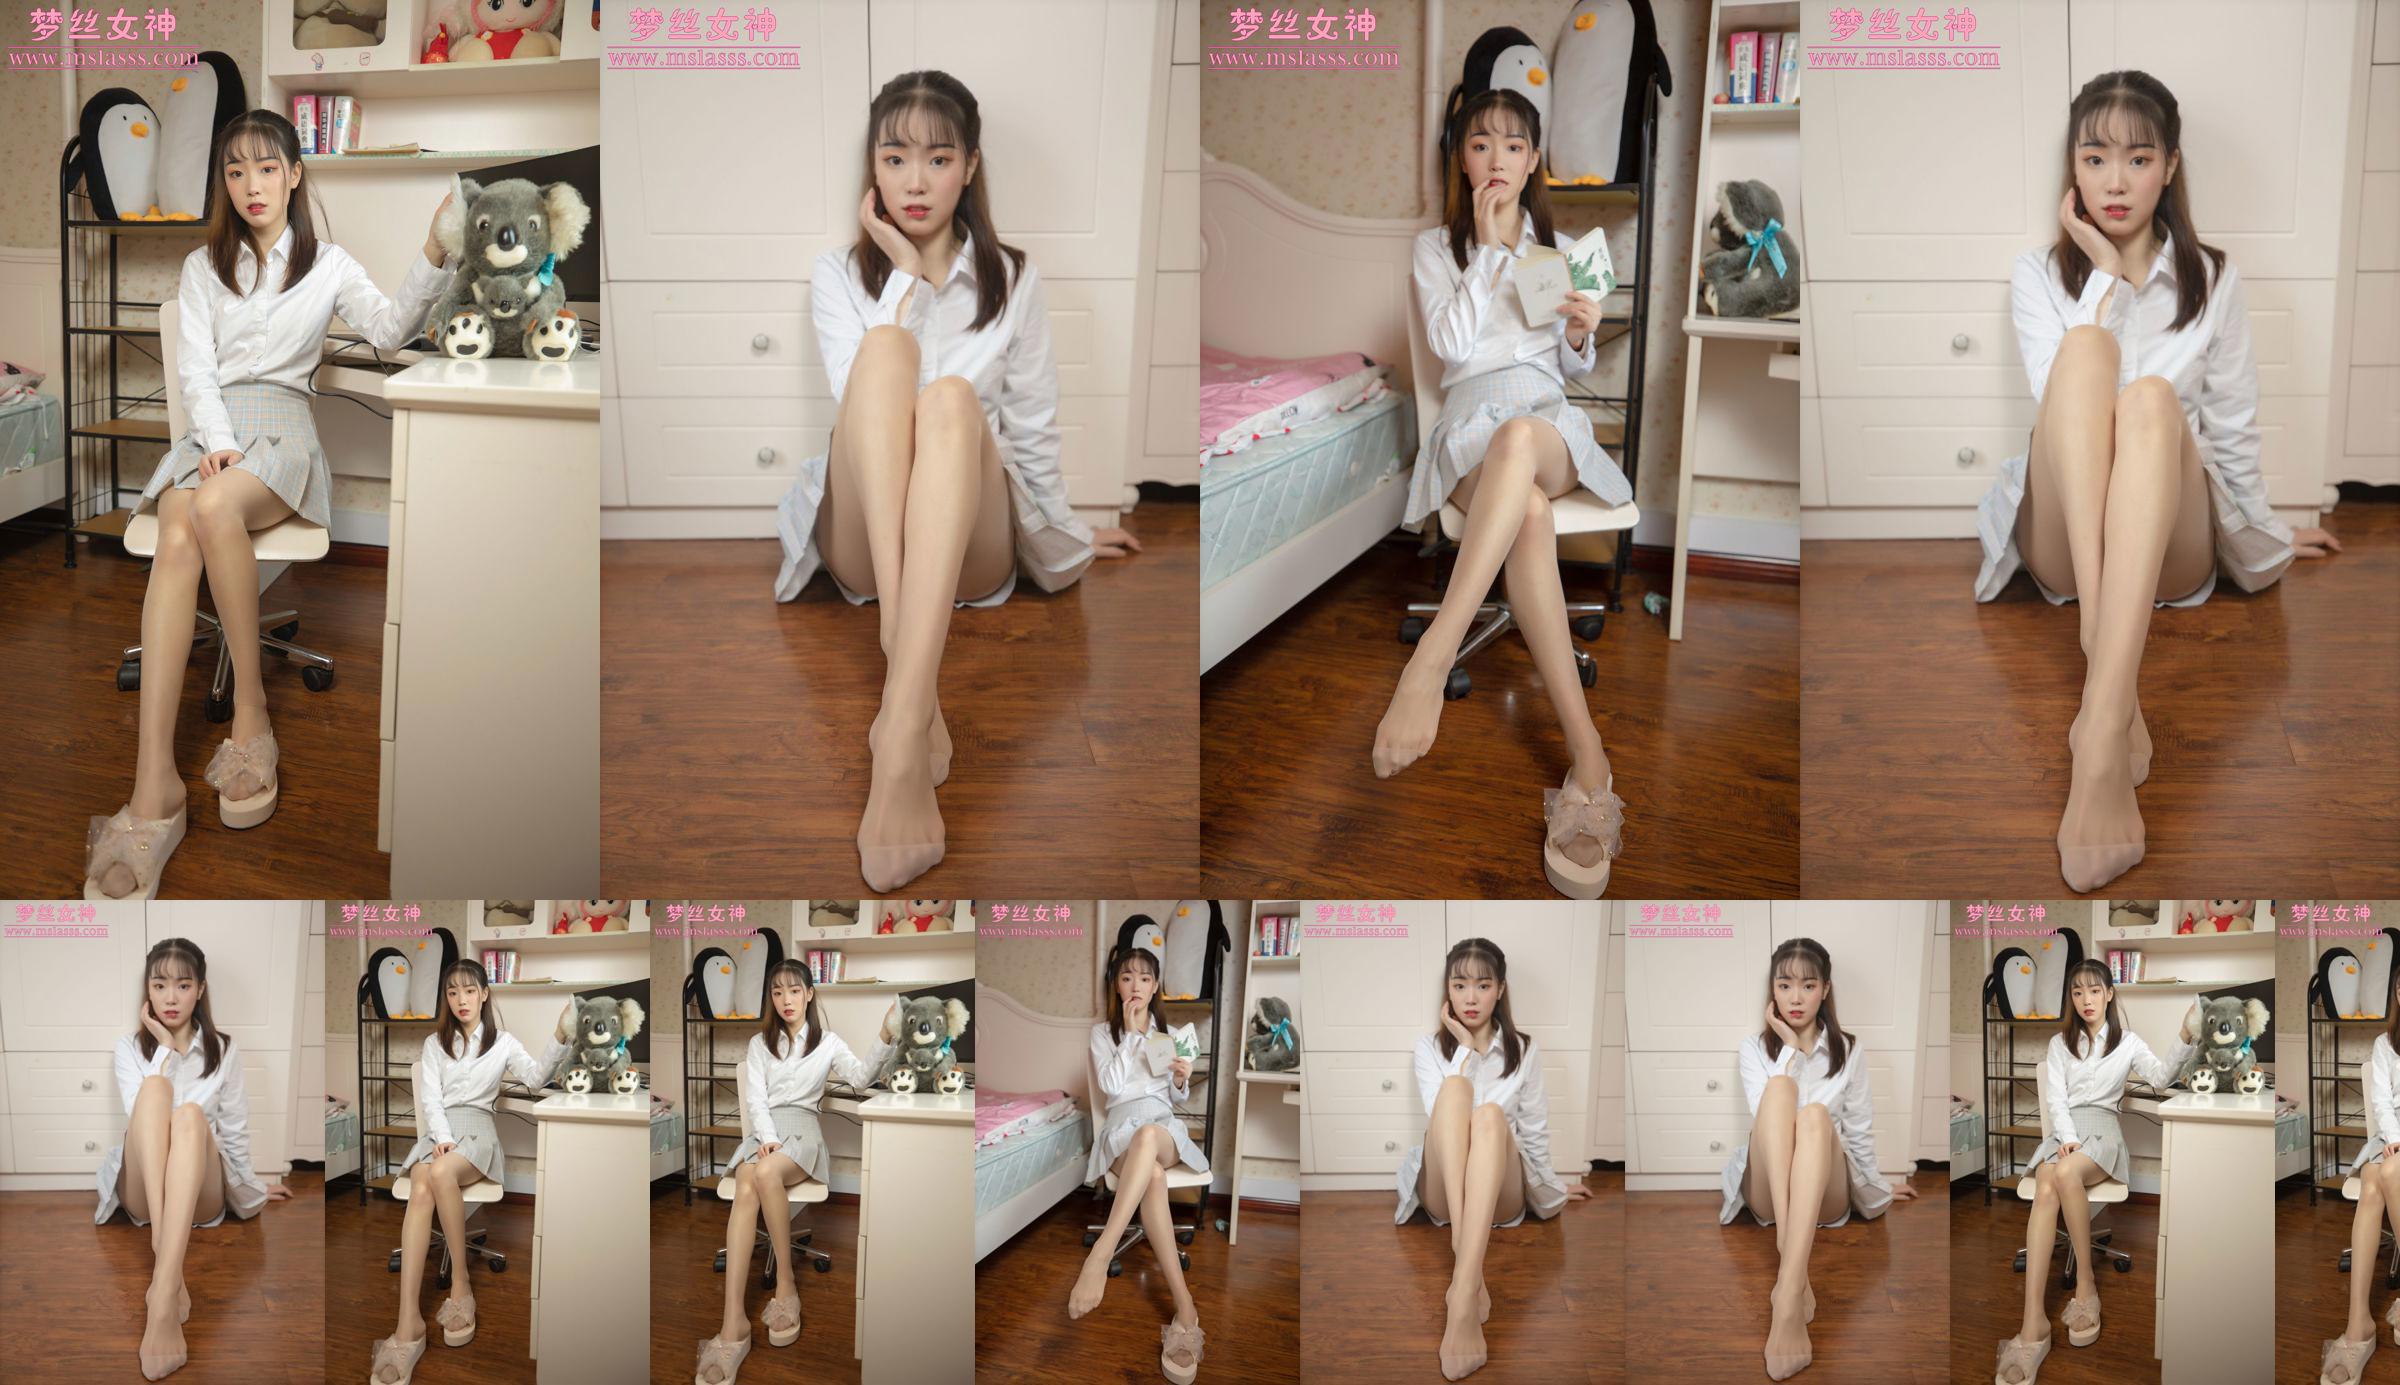 [MSLASS] Zhang Qiying new model goddess No.5cb593 Page 3